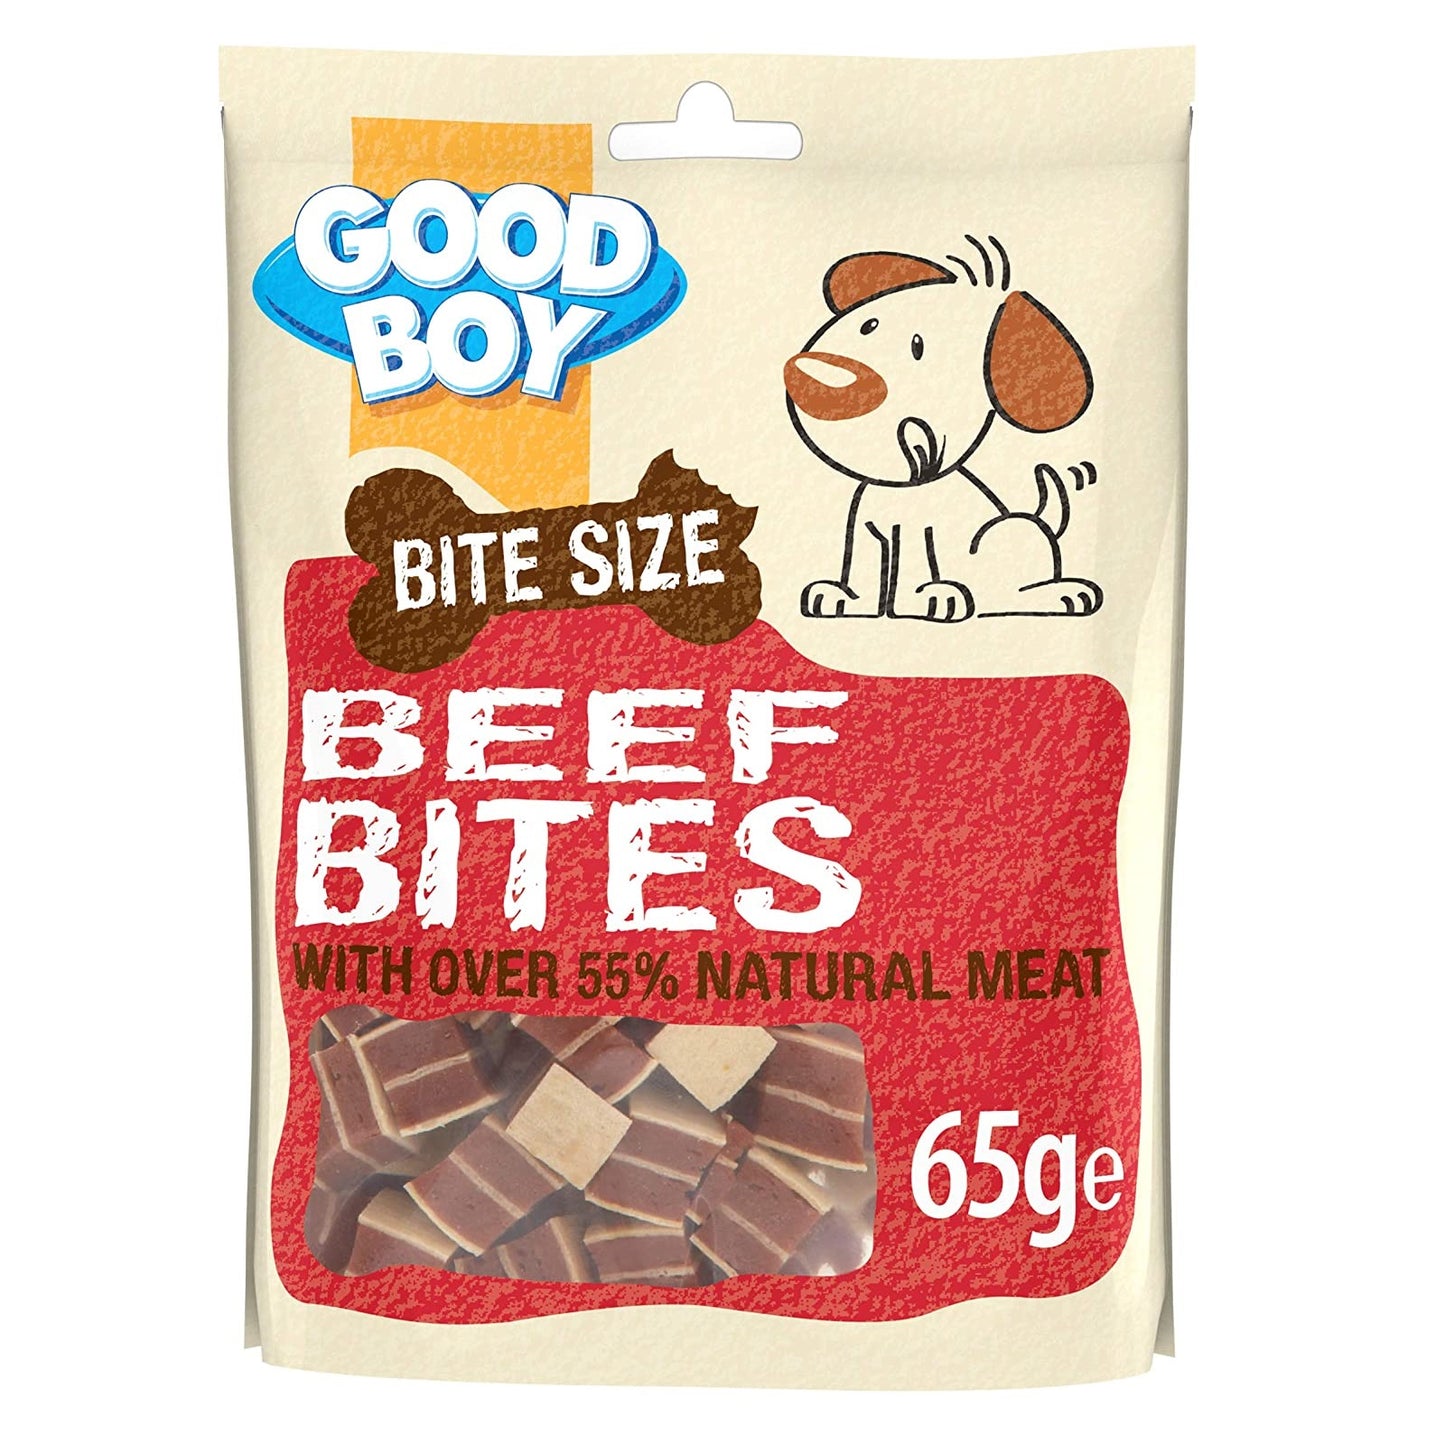 Good Boy - Deli Bites (65g)